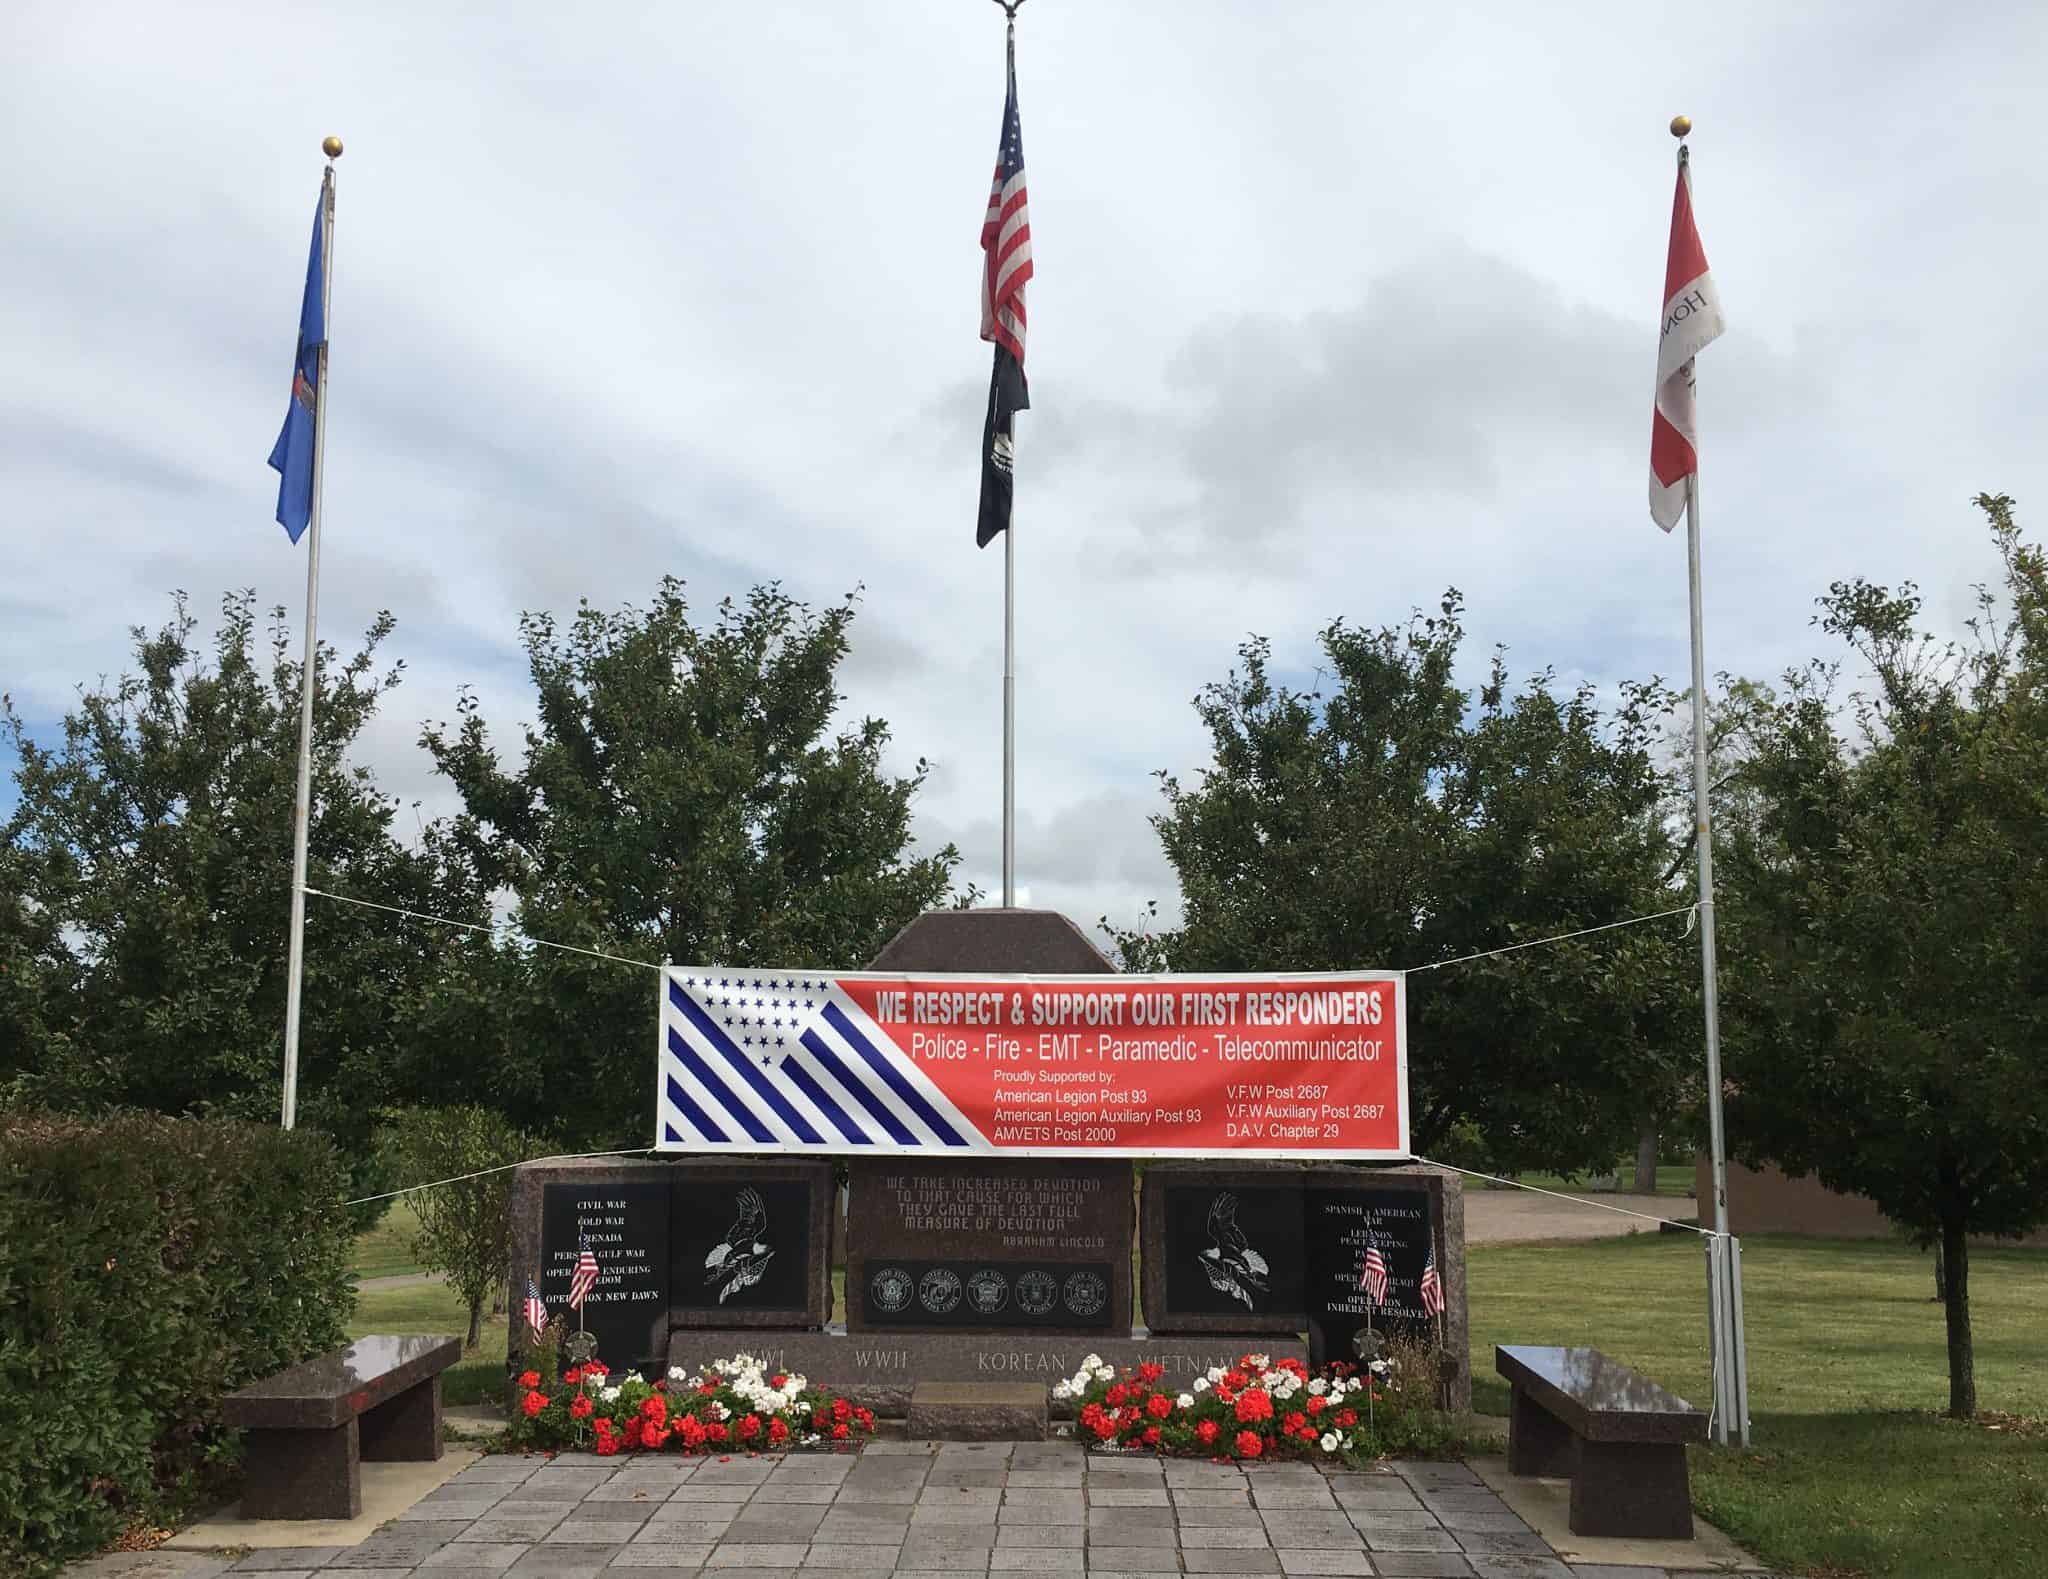 Veterans organizations sponsor banner honoring first responders